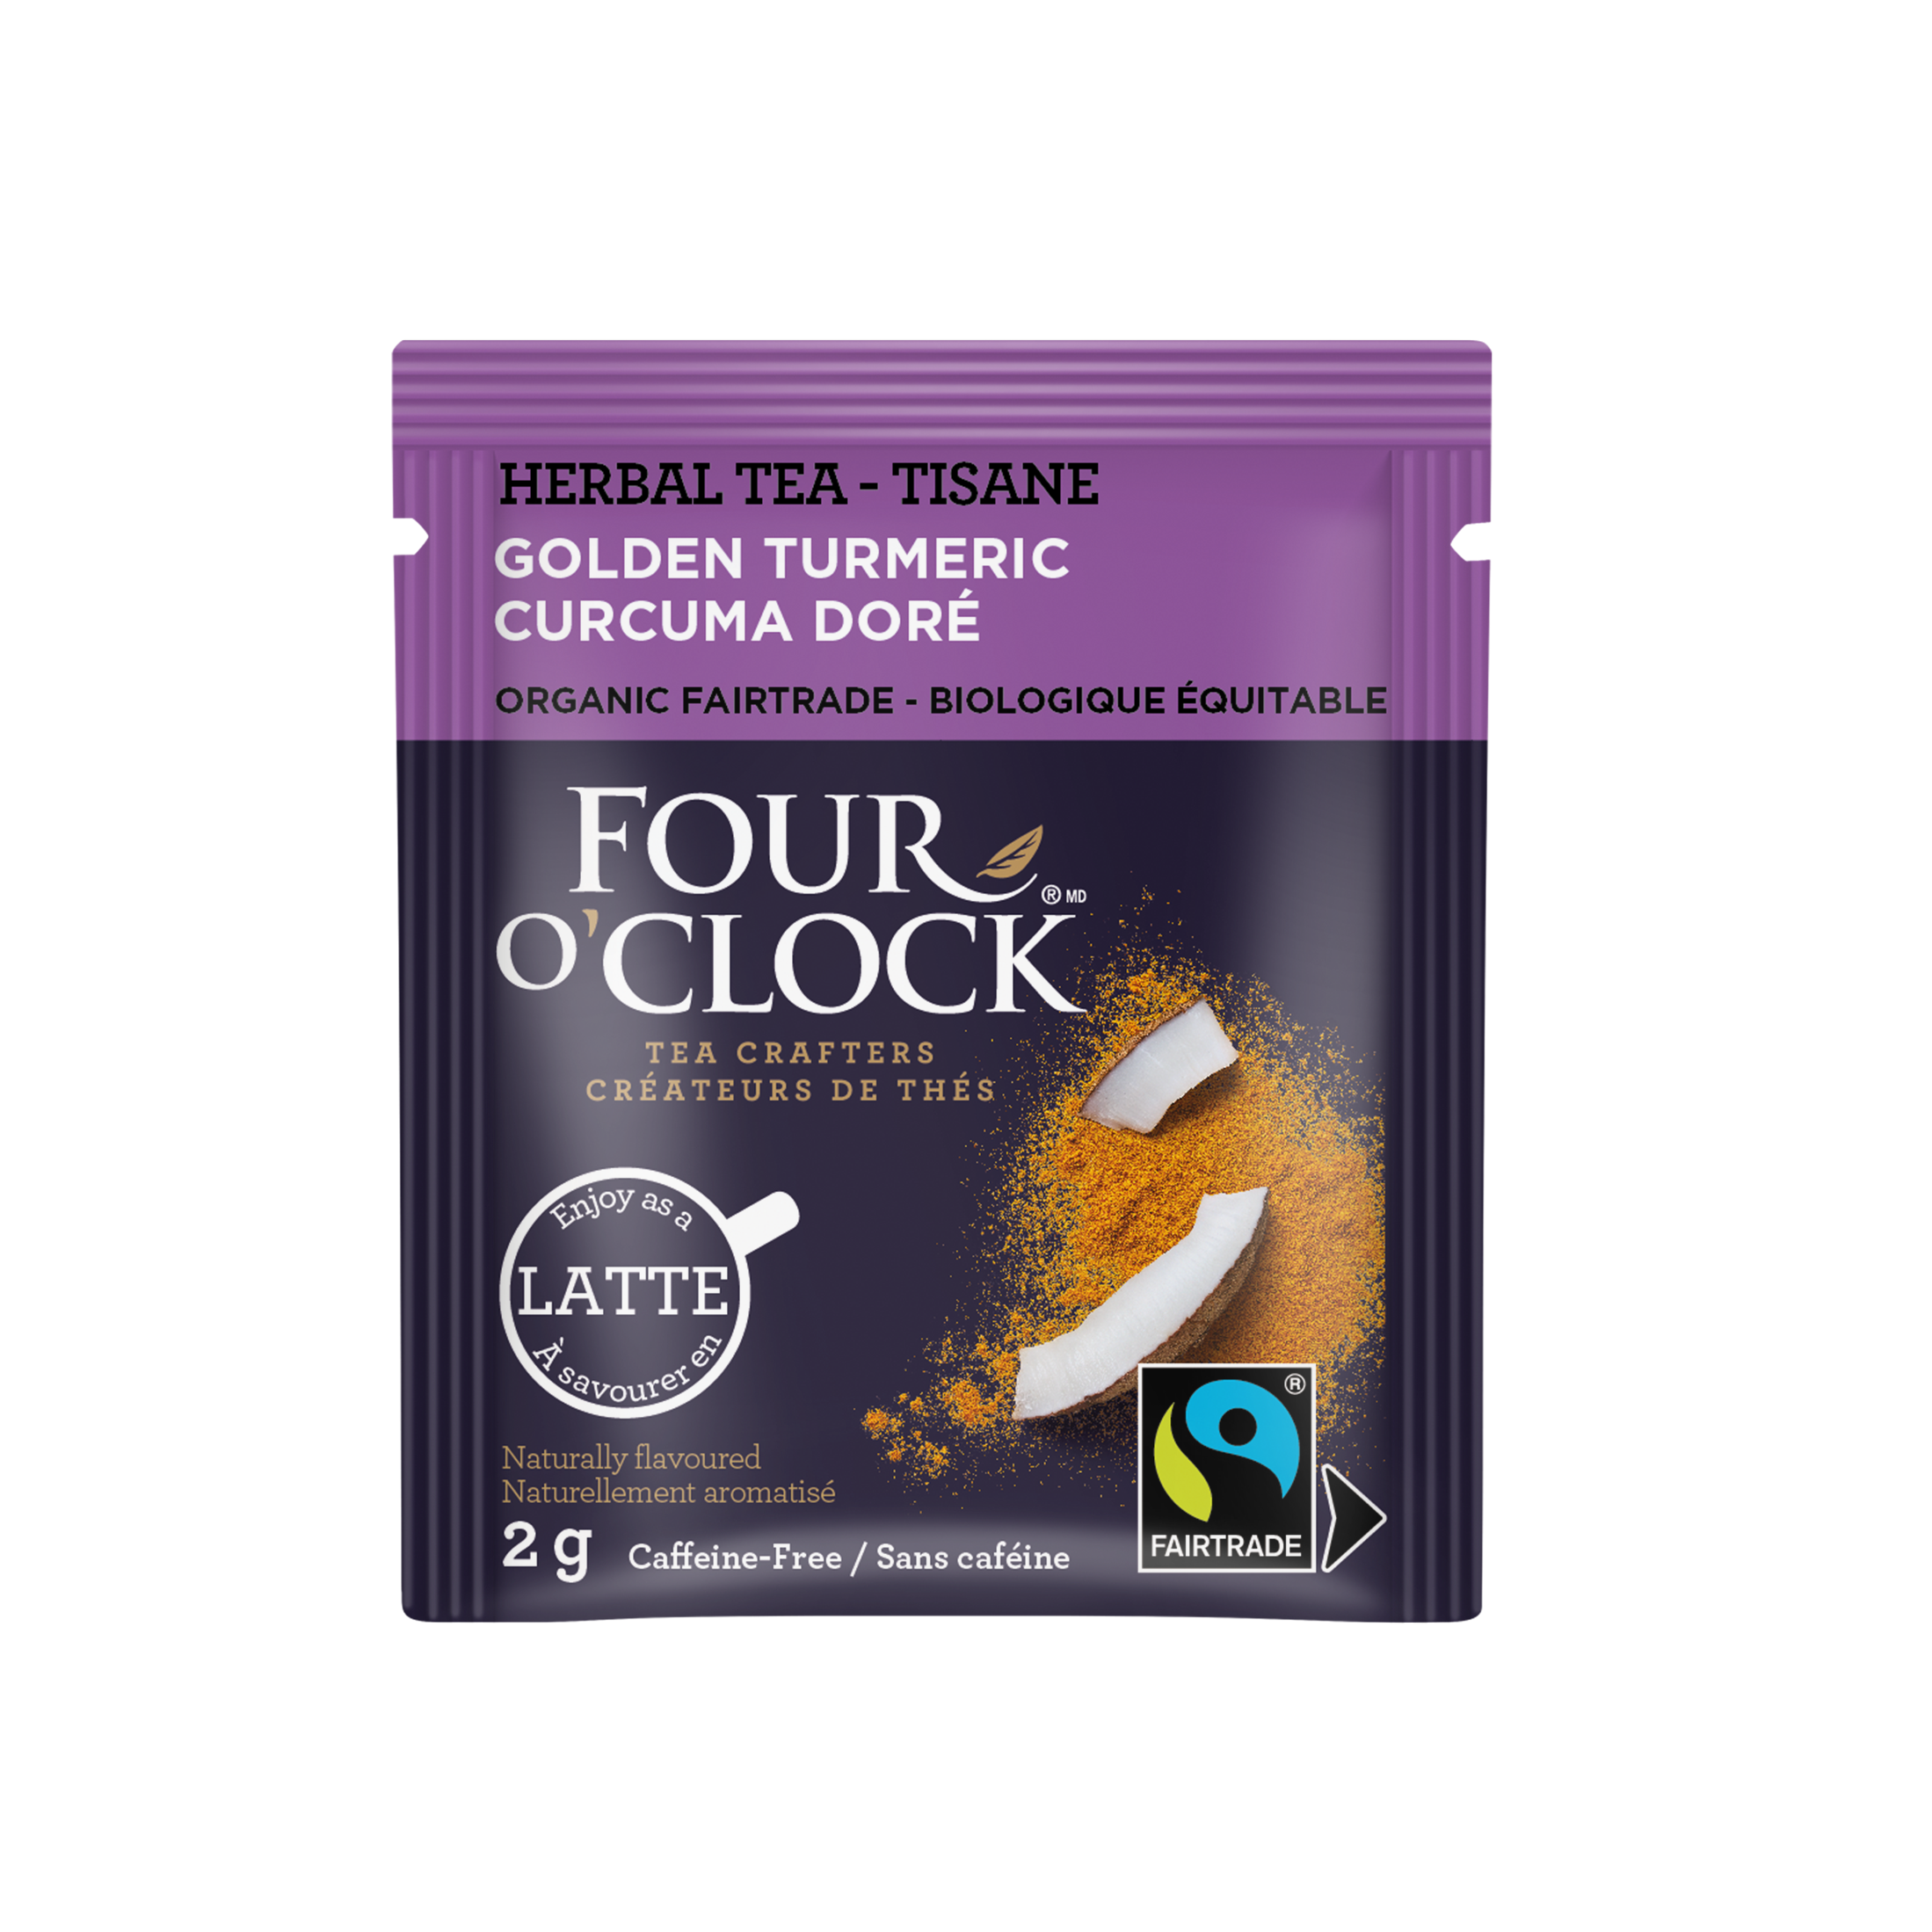 Golden Turmeric Organic Fairtrade Herbal Tea